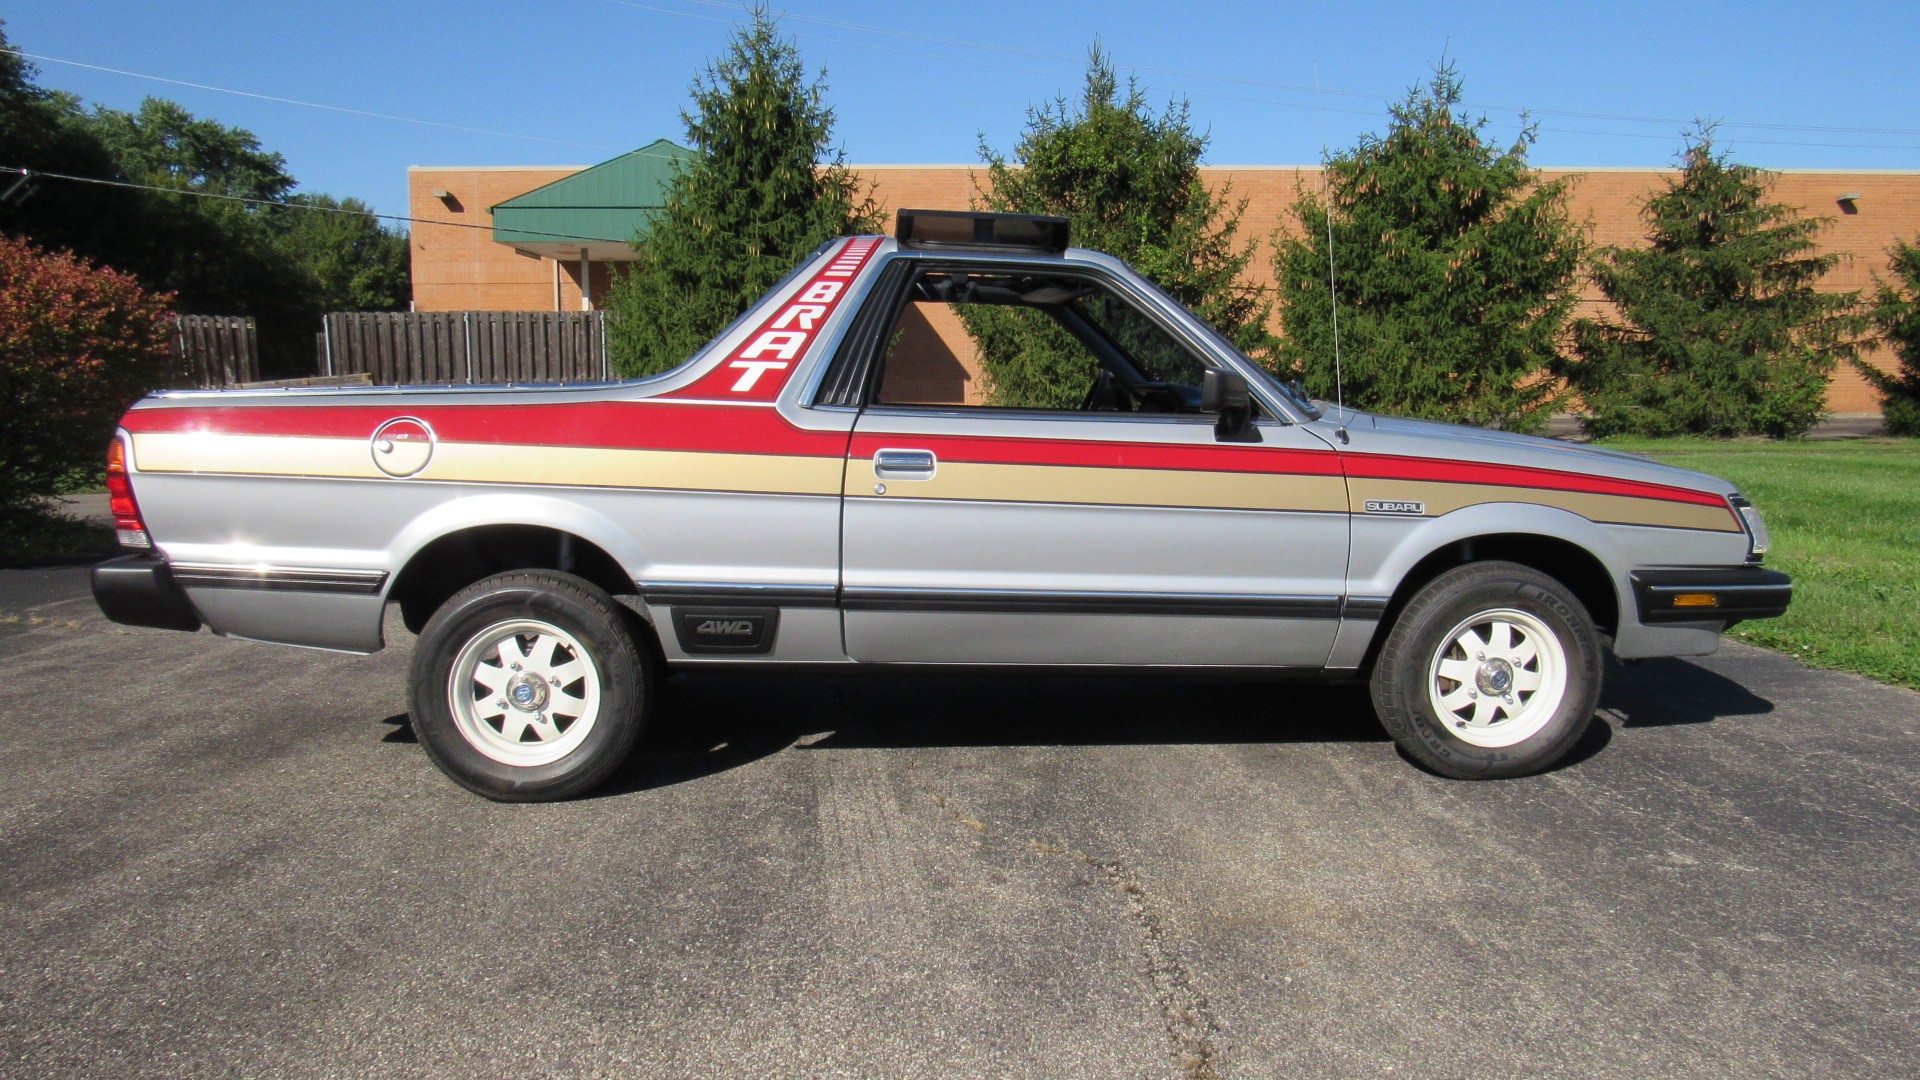 1984 Subaru Brat, Jump Seats, T Tops, SOLD!